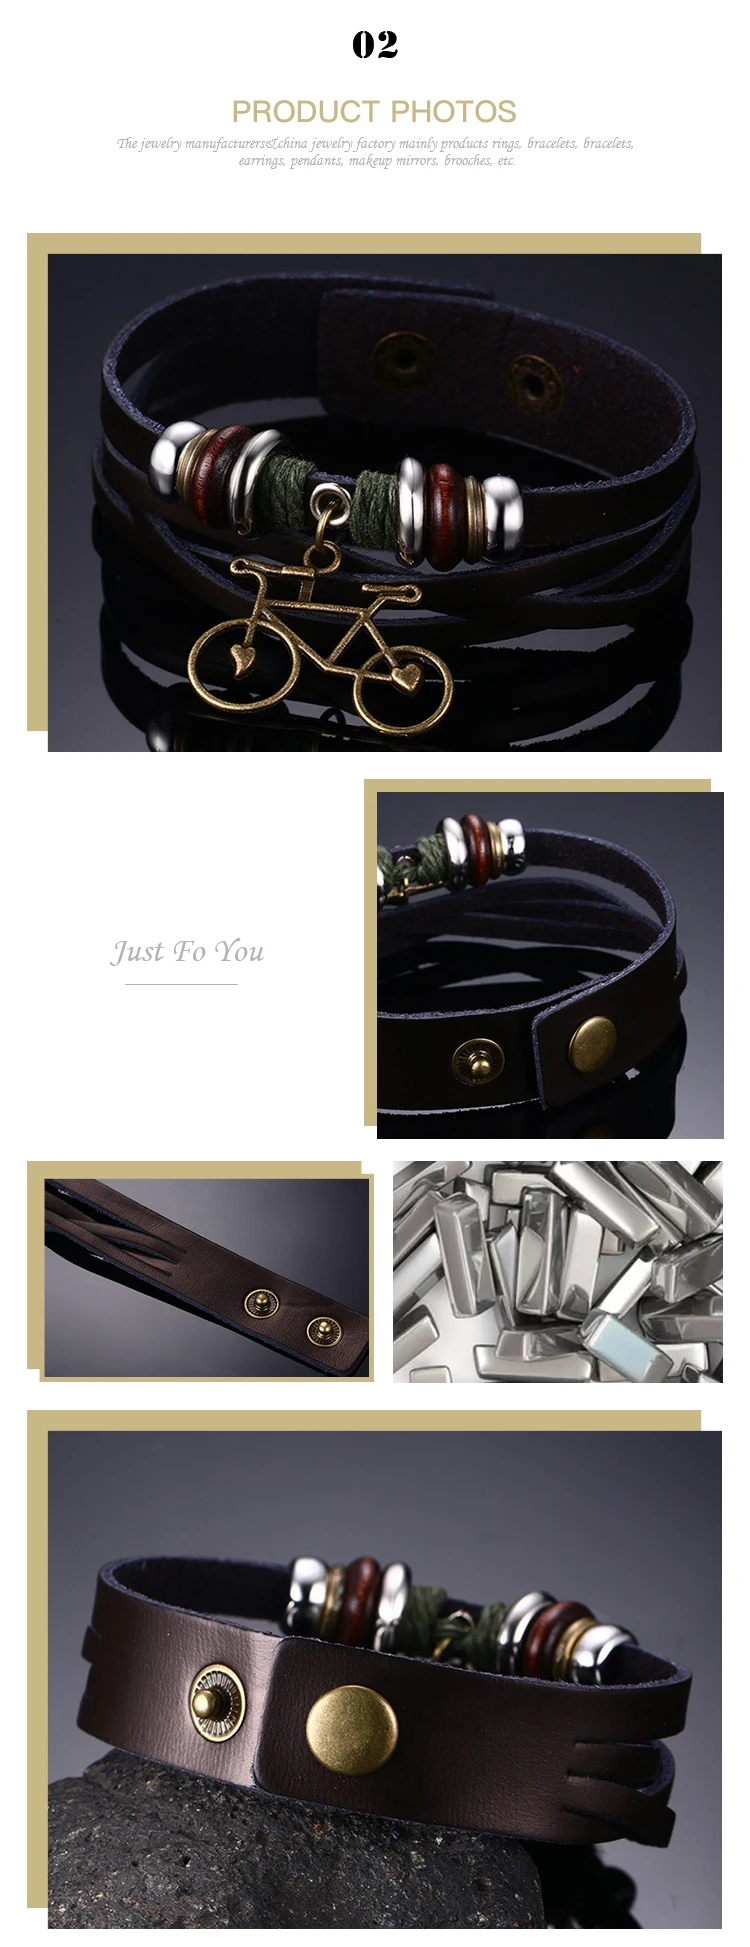 New Product Alloy bicycle Weave bracelet Ethnic style vintage leather bracelet BL-181